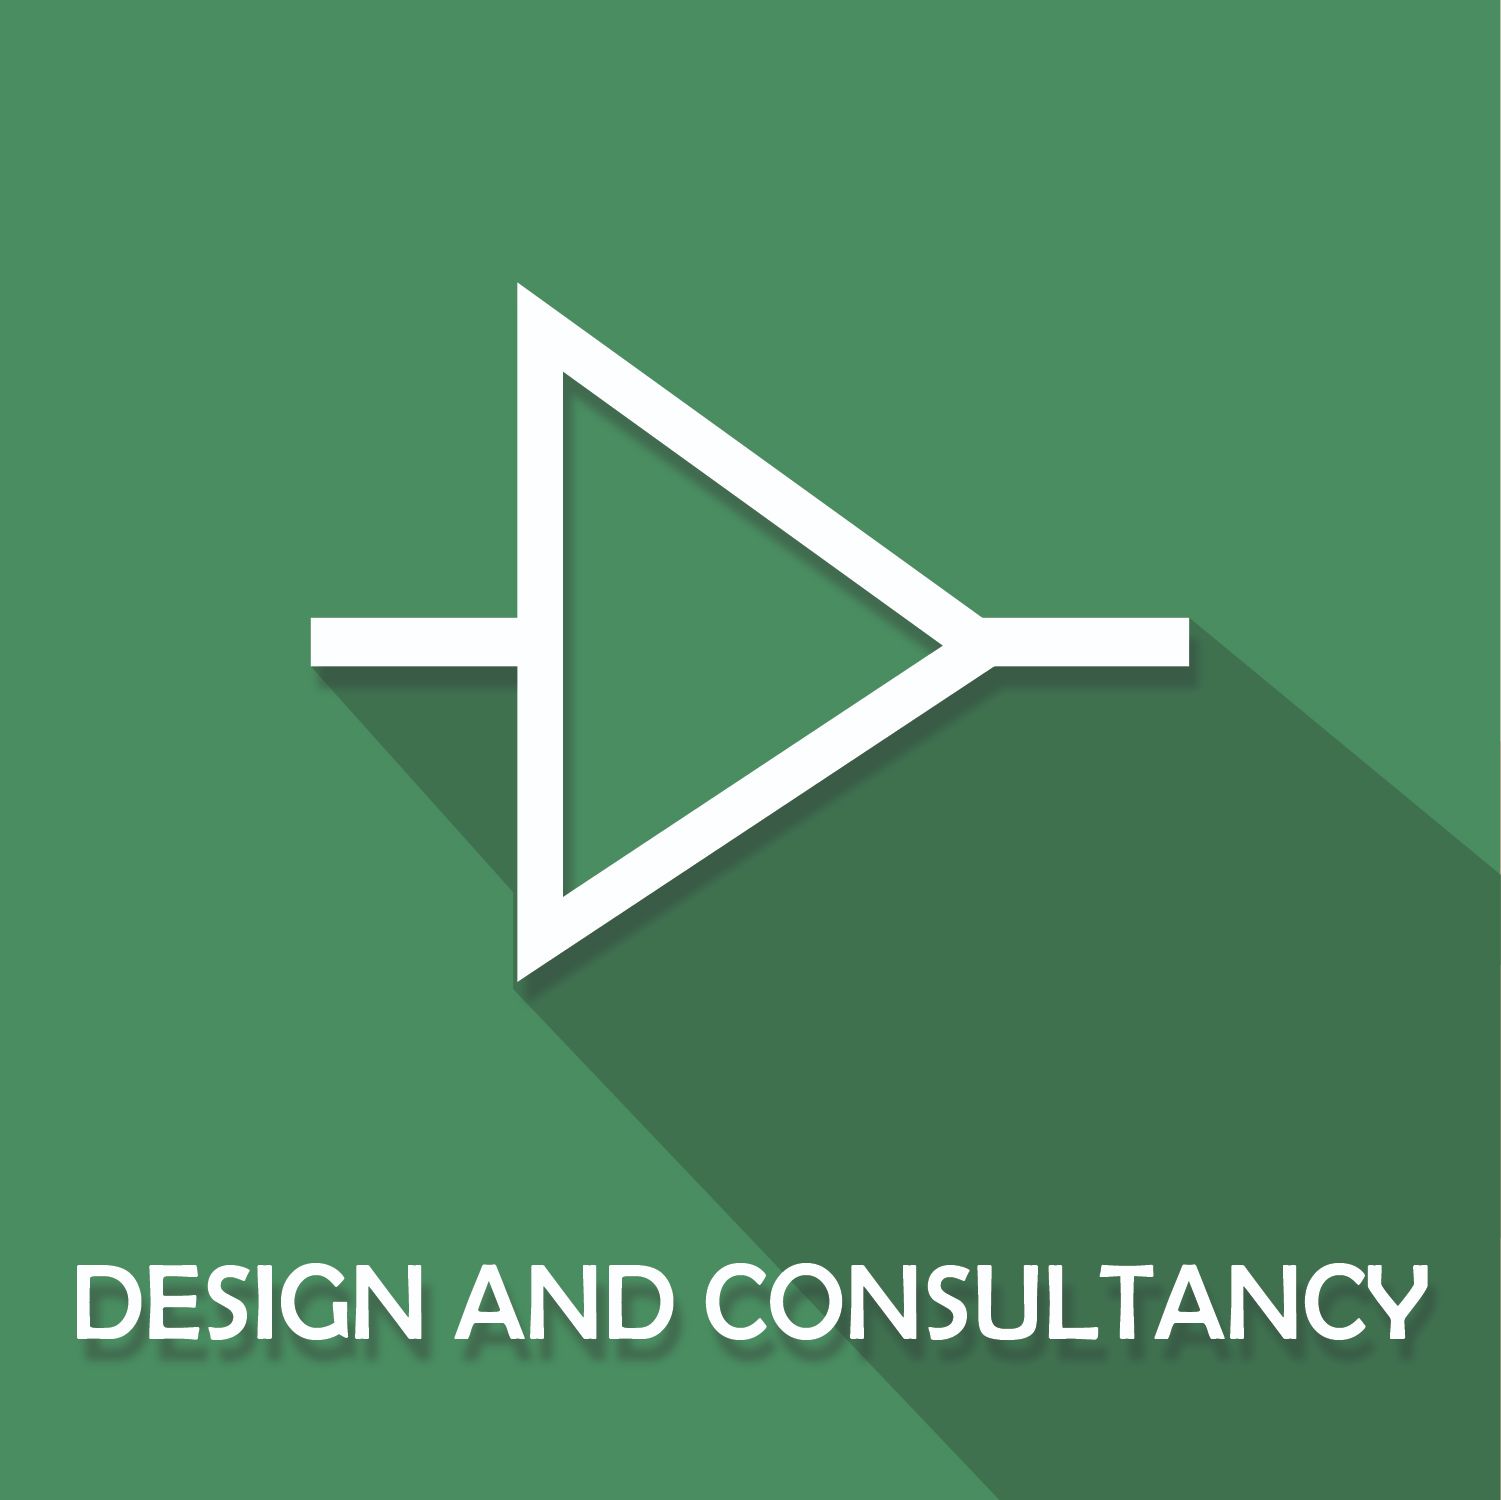 Design and Consultancy
